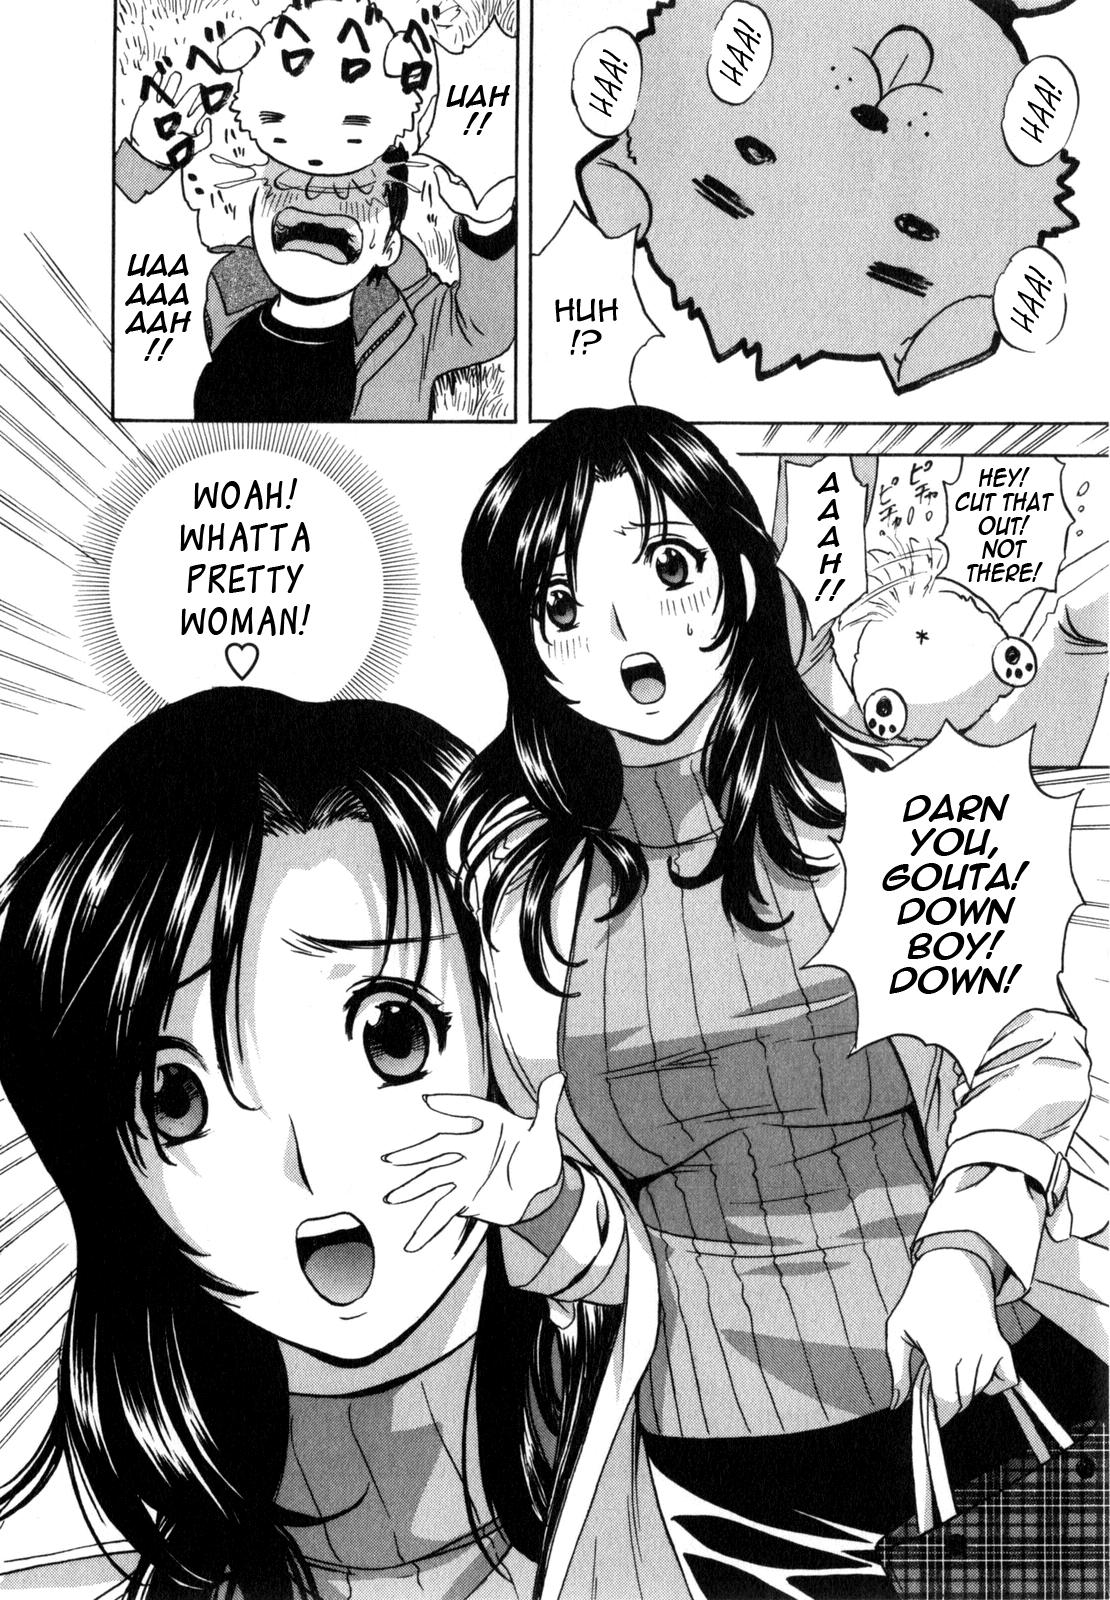 [Hidemaru] Life with Married Women Just Like a Manga 1 - Ch. 1-2 [English] {Tadanohito} 10